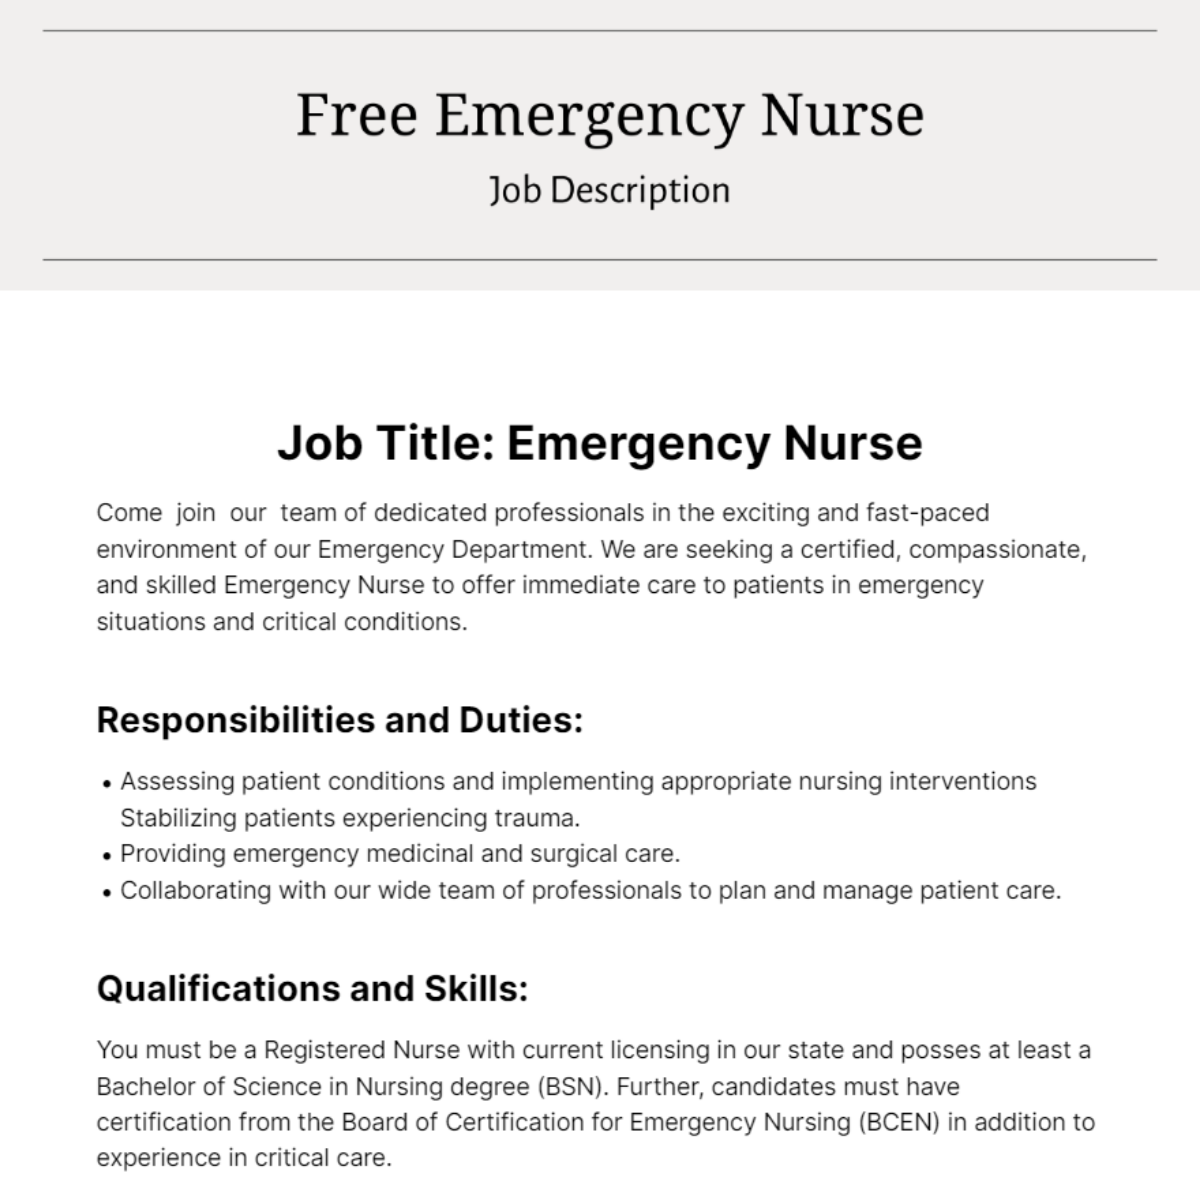 Free Emergency Nurse Job Description Template